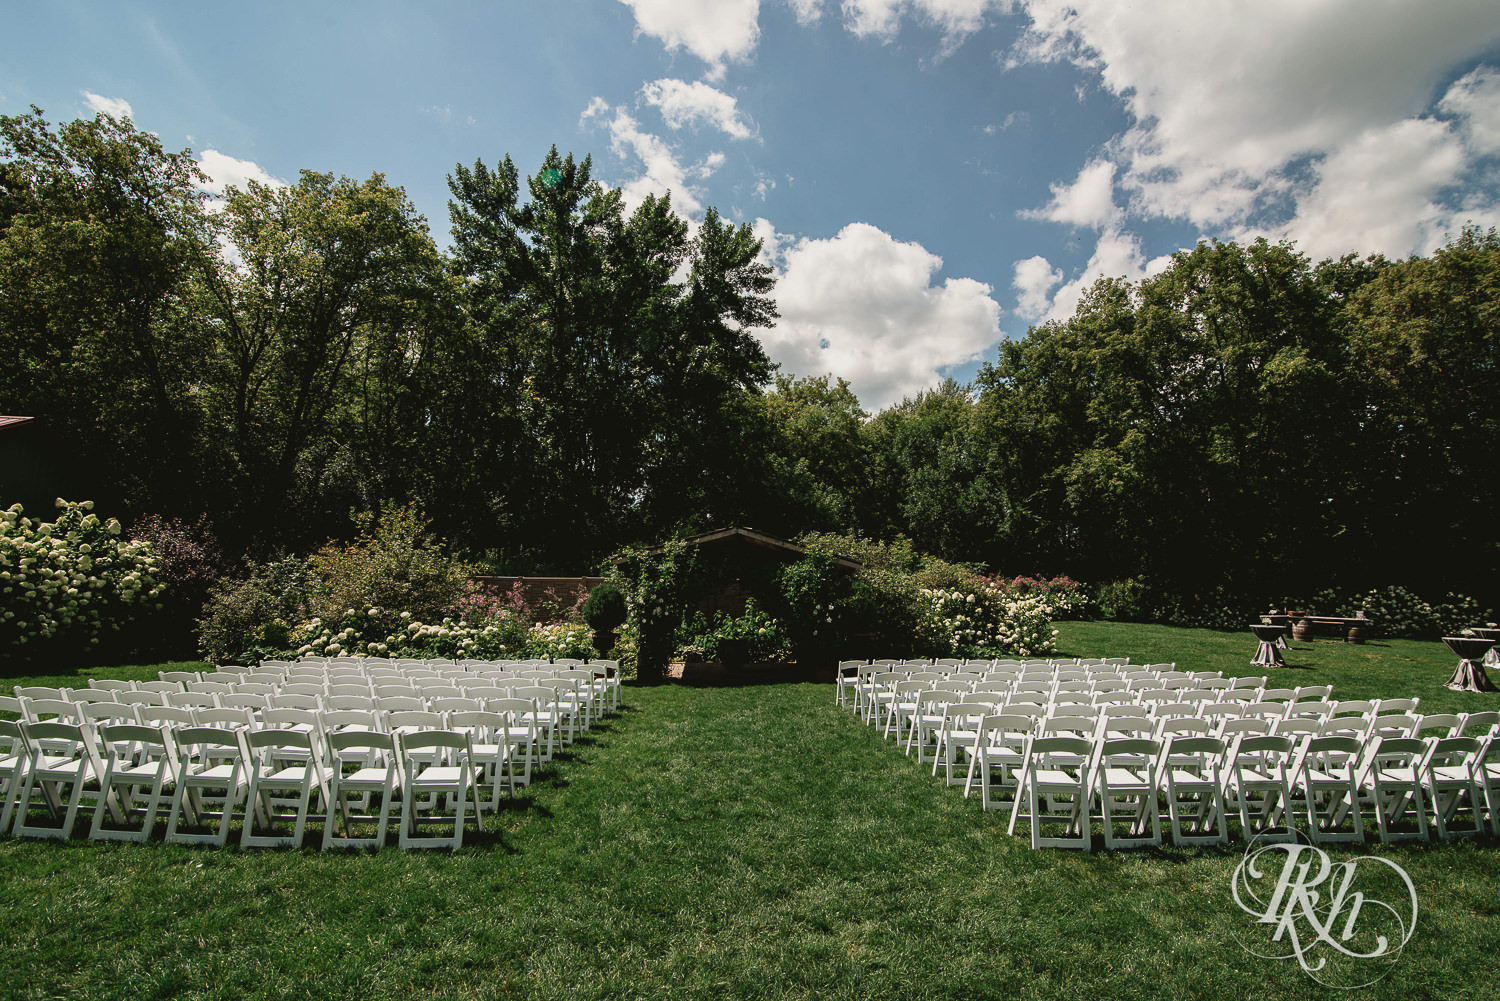 Outdoor summer wedding ceremony setup at Camrose Hill Flower Farm in Stillwater, Minnesota.